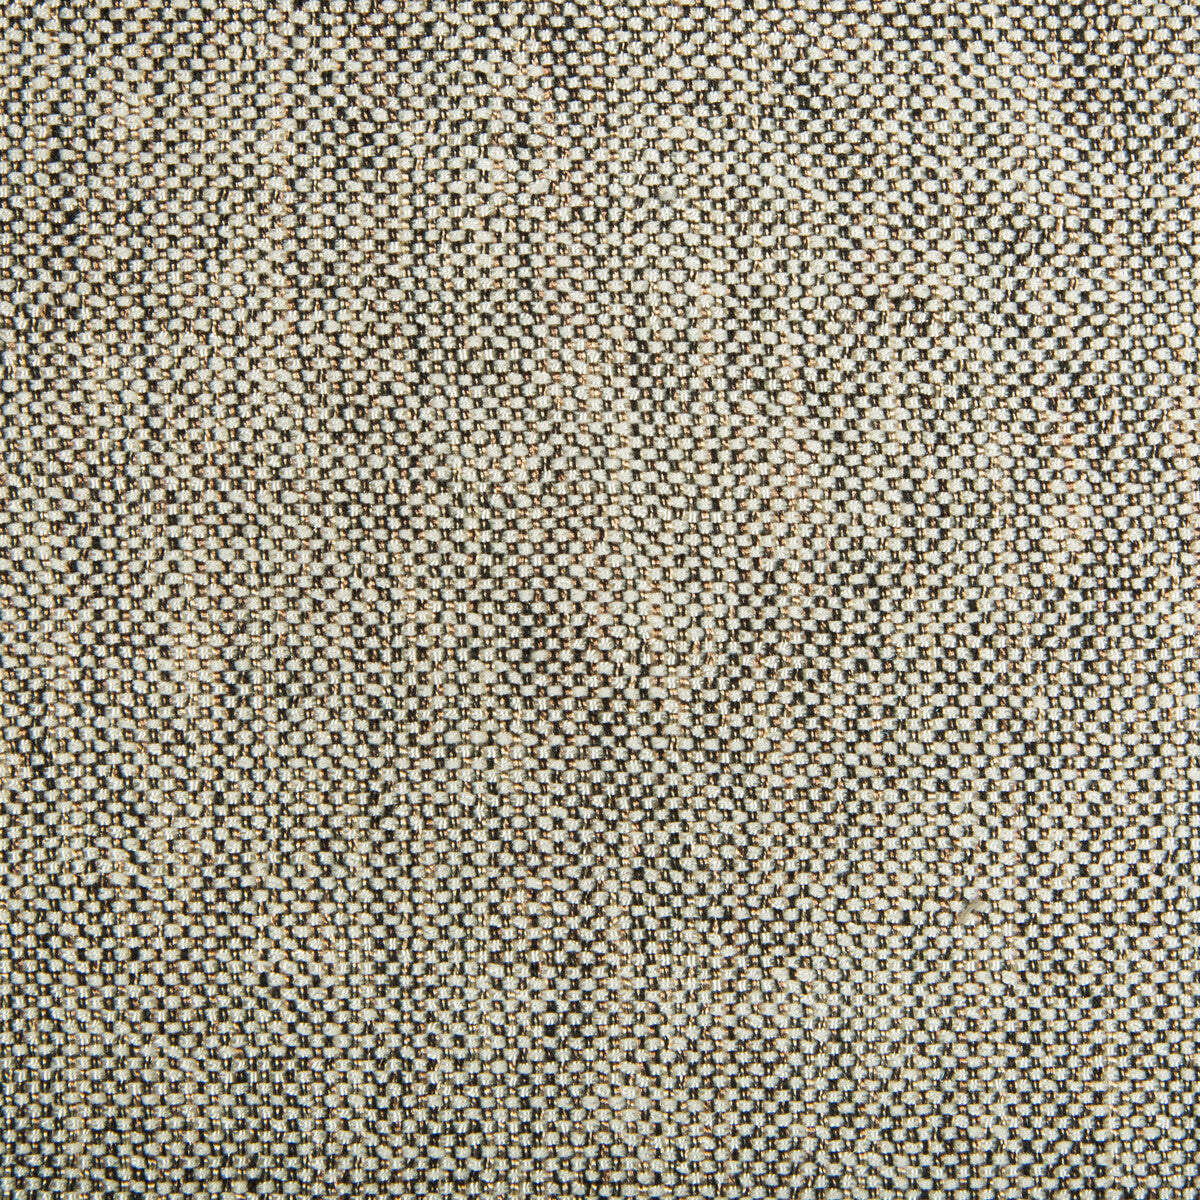 Kravet Smart fabric in 34939-816 color - pattern 34939.816.0 - by Kravet Smart